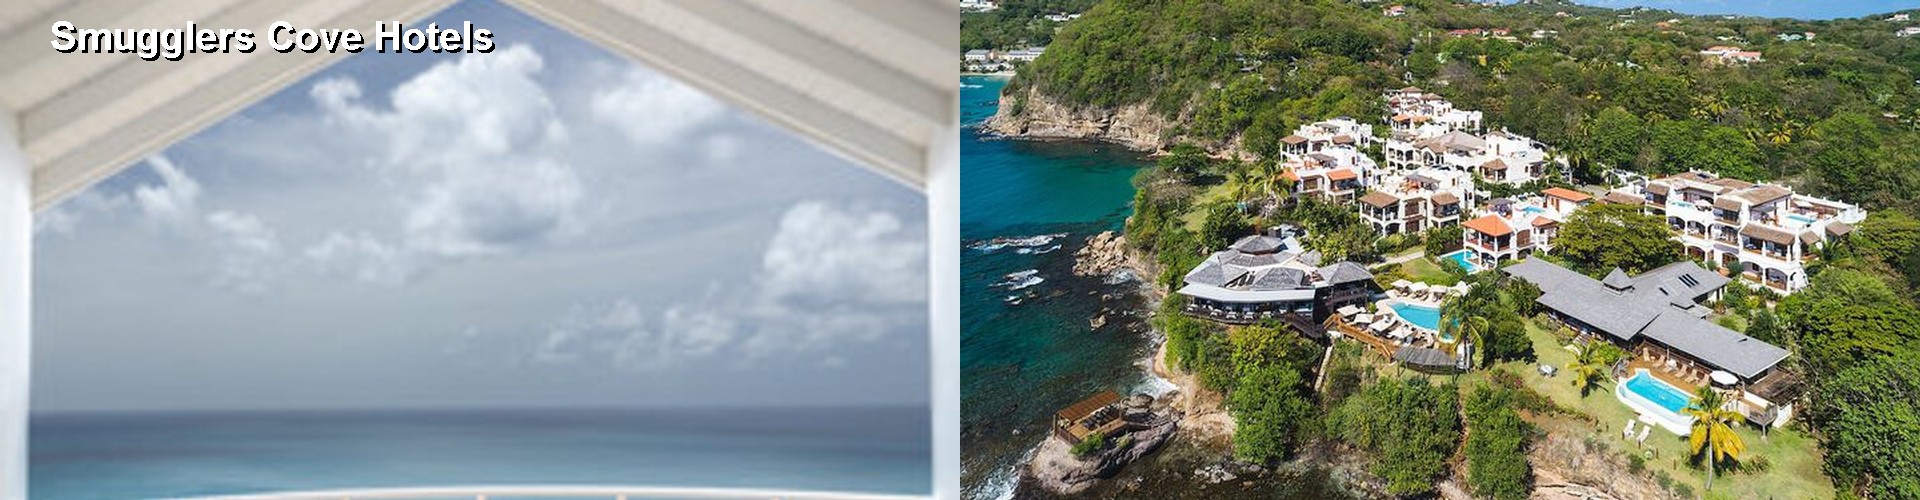 5 Best Hotels near Smugglers Cove